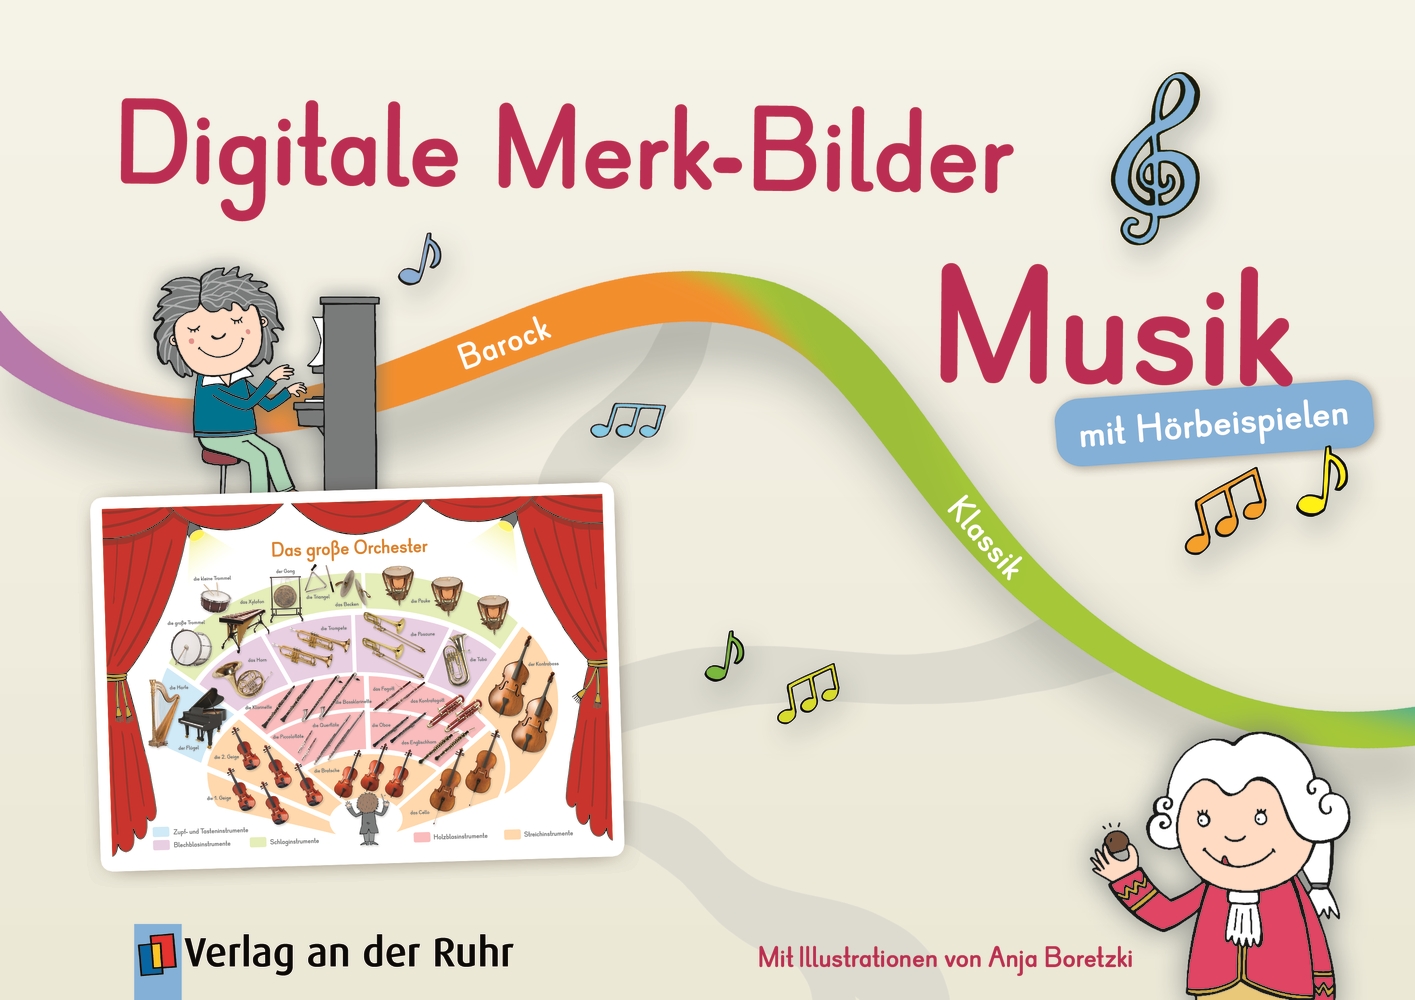 Digitale Merk-Bilder Musik - Premium-Lizenz - Online